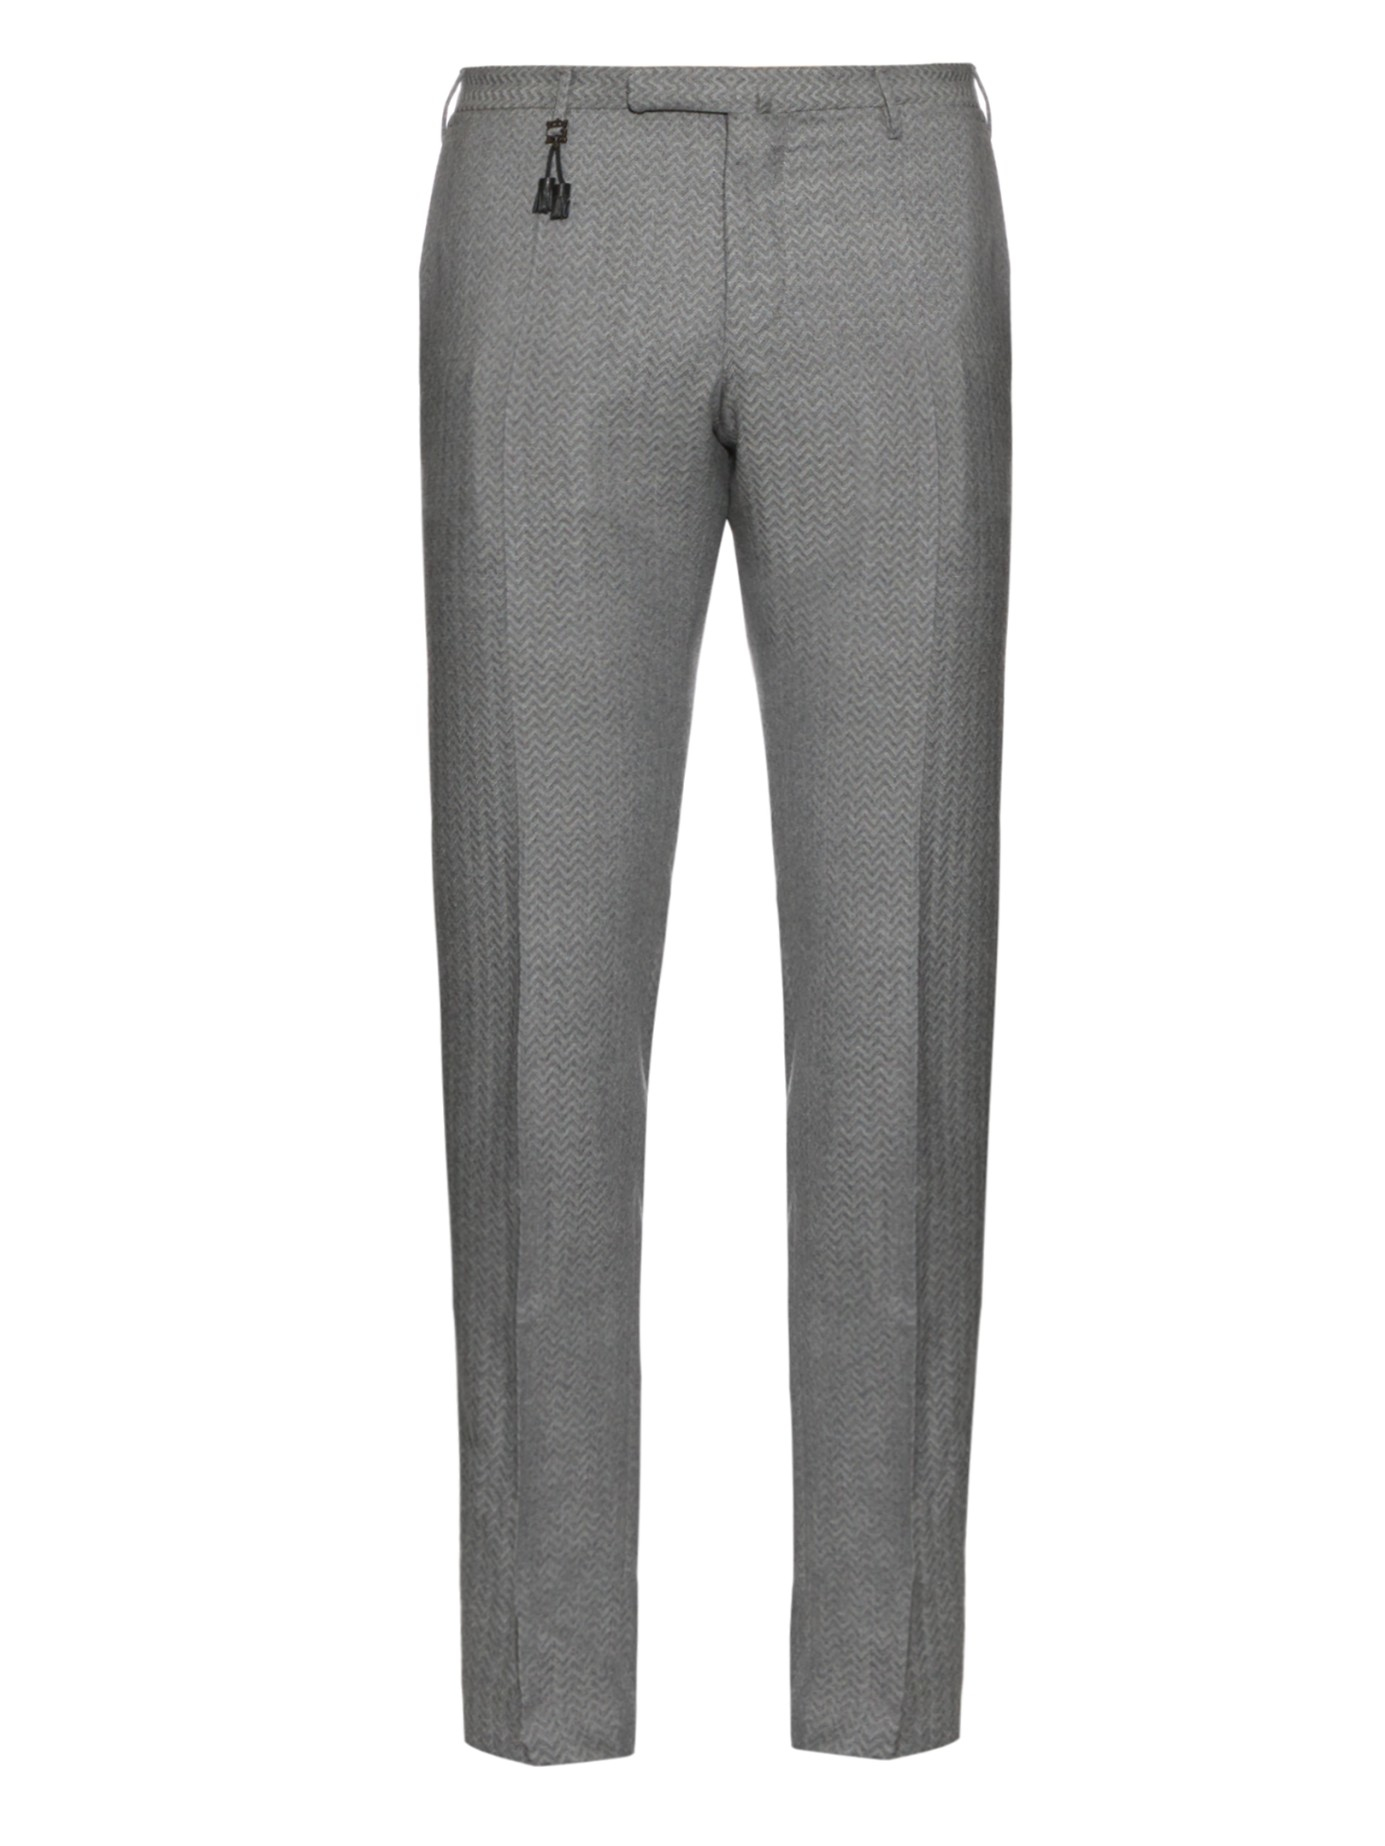 Lyst - Incotex Slim-fit Herringbone Wool Trousers in Gray for Men